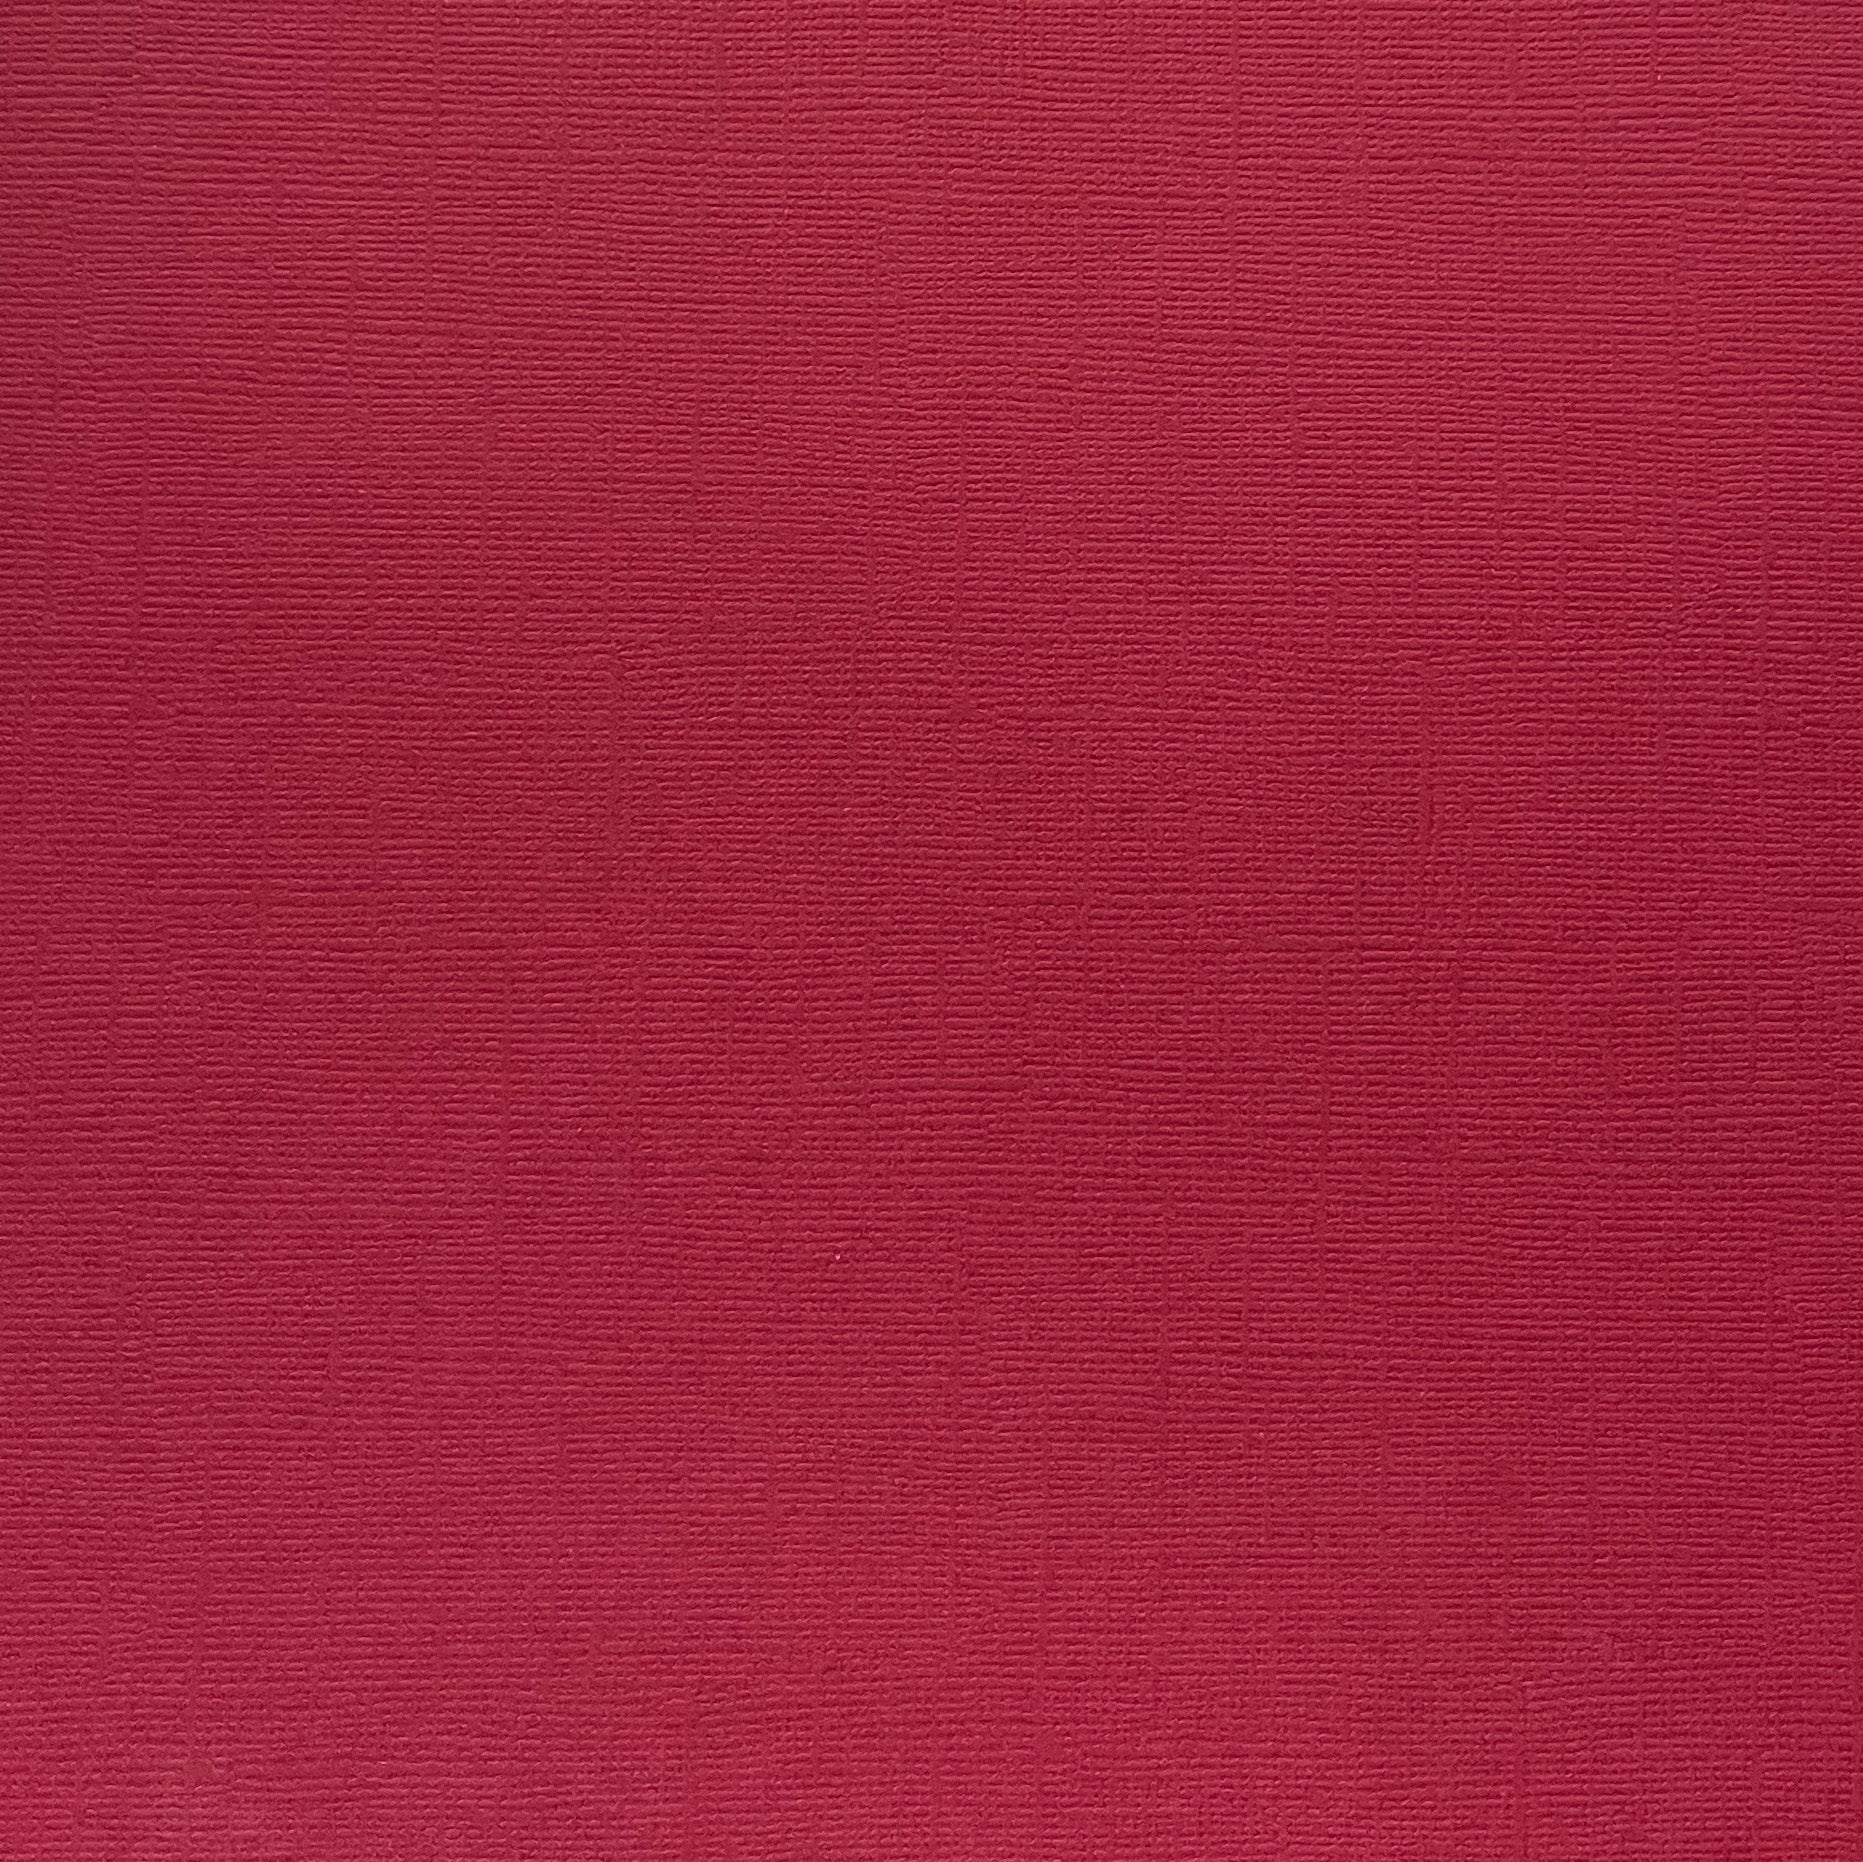 DARK RED - Textured 12x12 Cardstock - Encore Paper